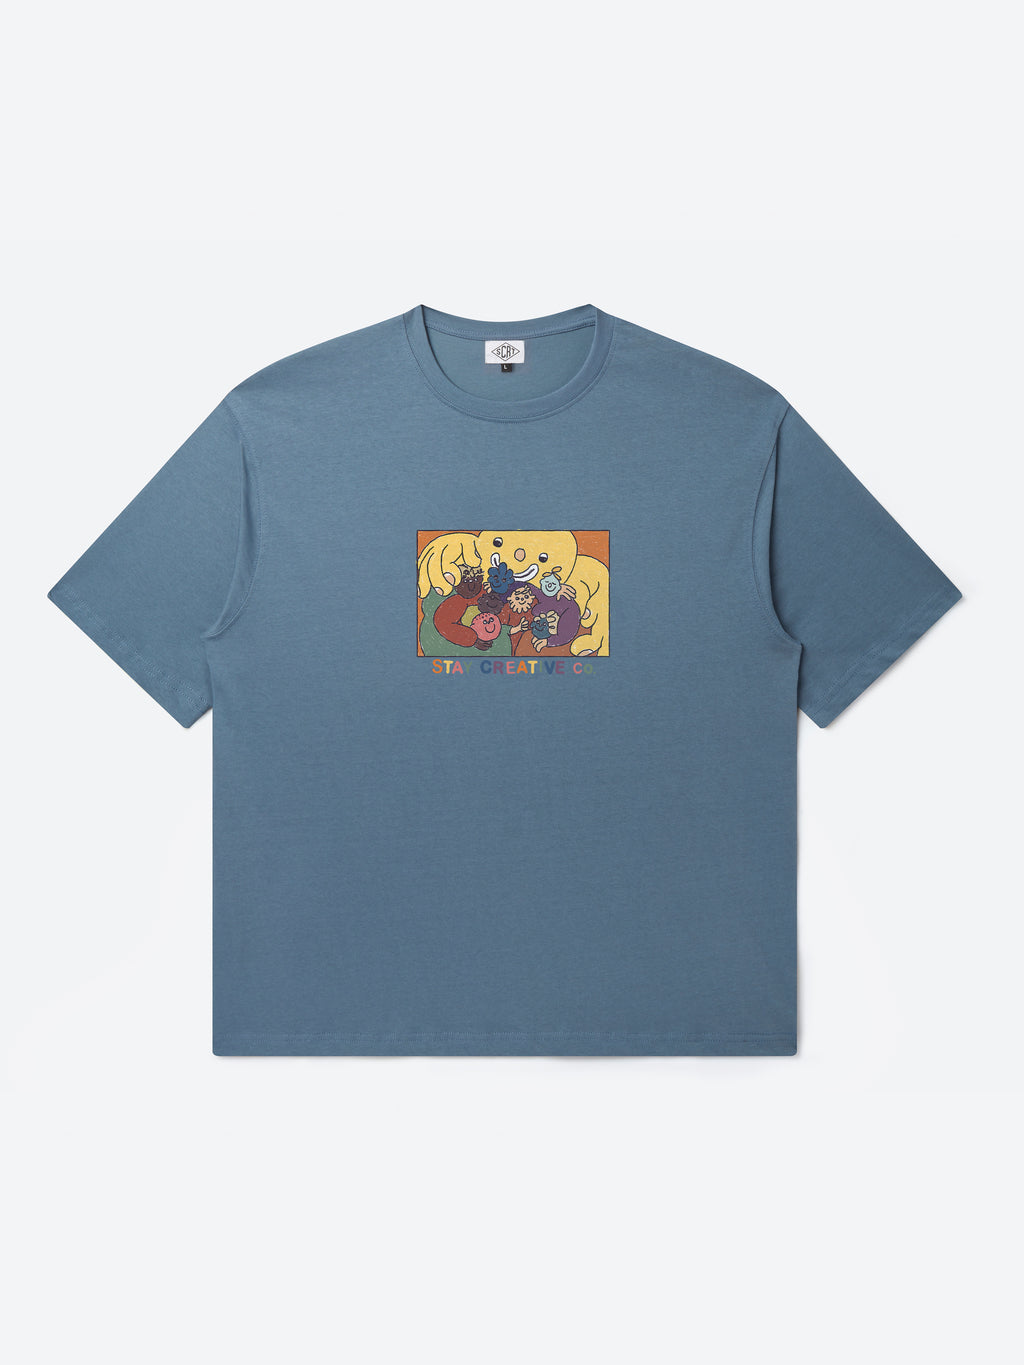 Creative Co T-Shirt - China Blue